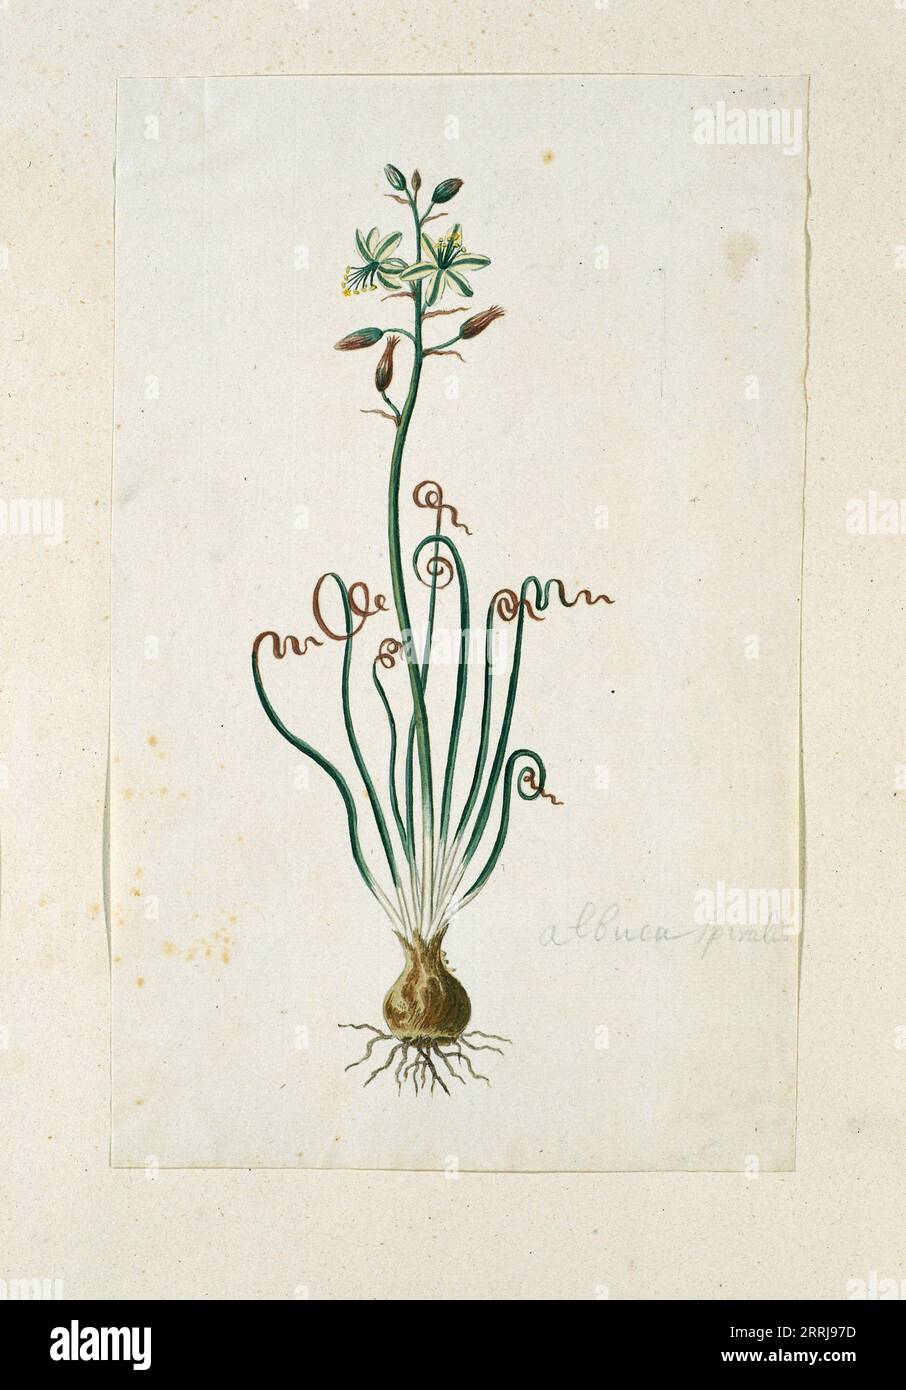 Ornithogalum Polyphyllum Jacq, 1777-1786. Stock Photo